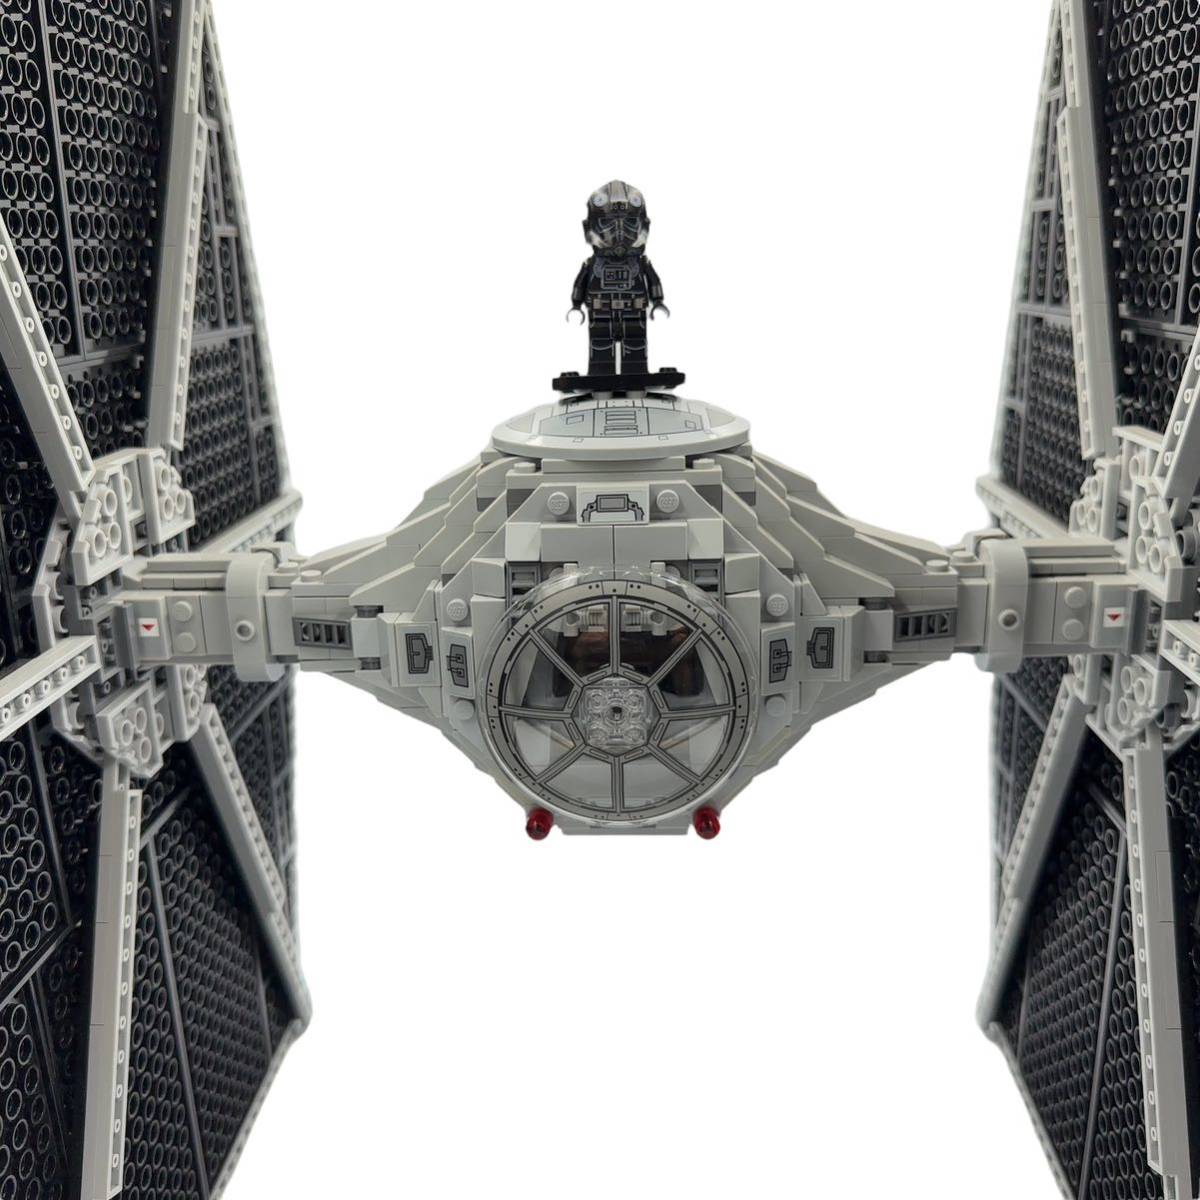 LEGO レゴ 75095 スターウォーズ タイファイター Star Wars Tie Fighter 取説付き 欠品有りの画像2